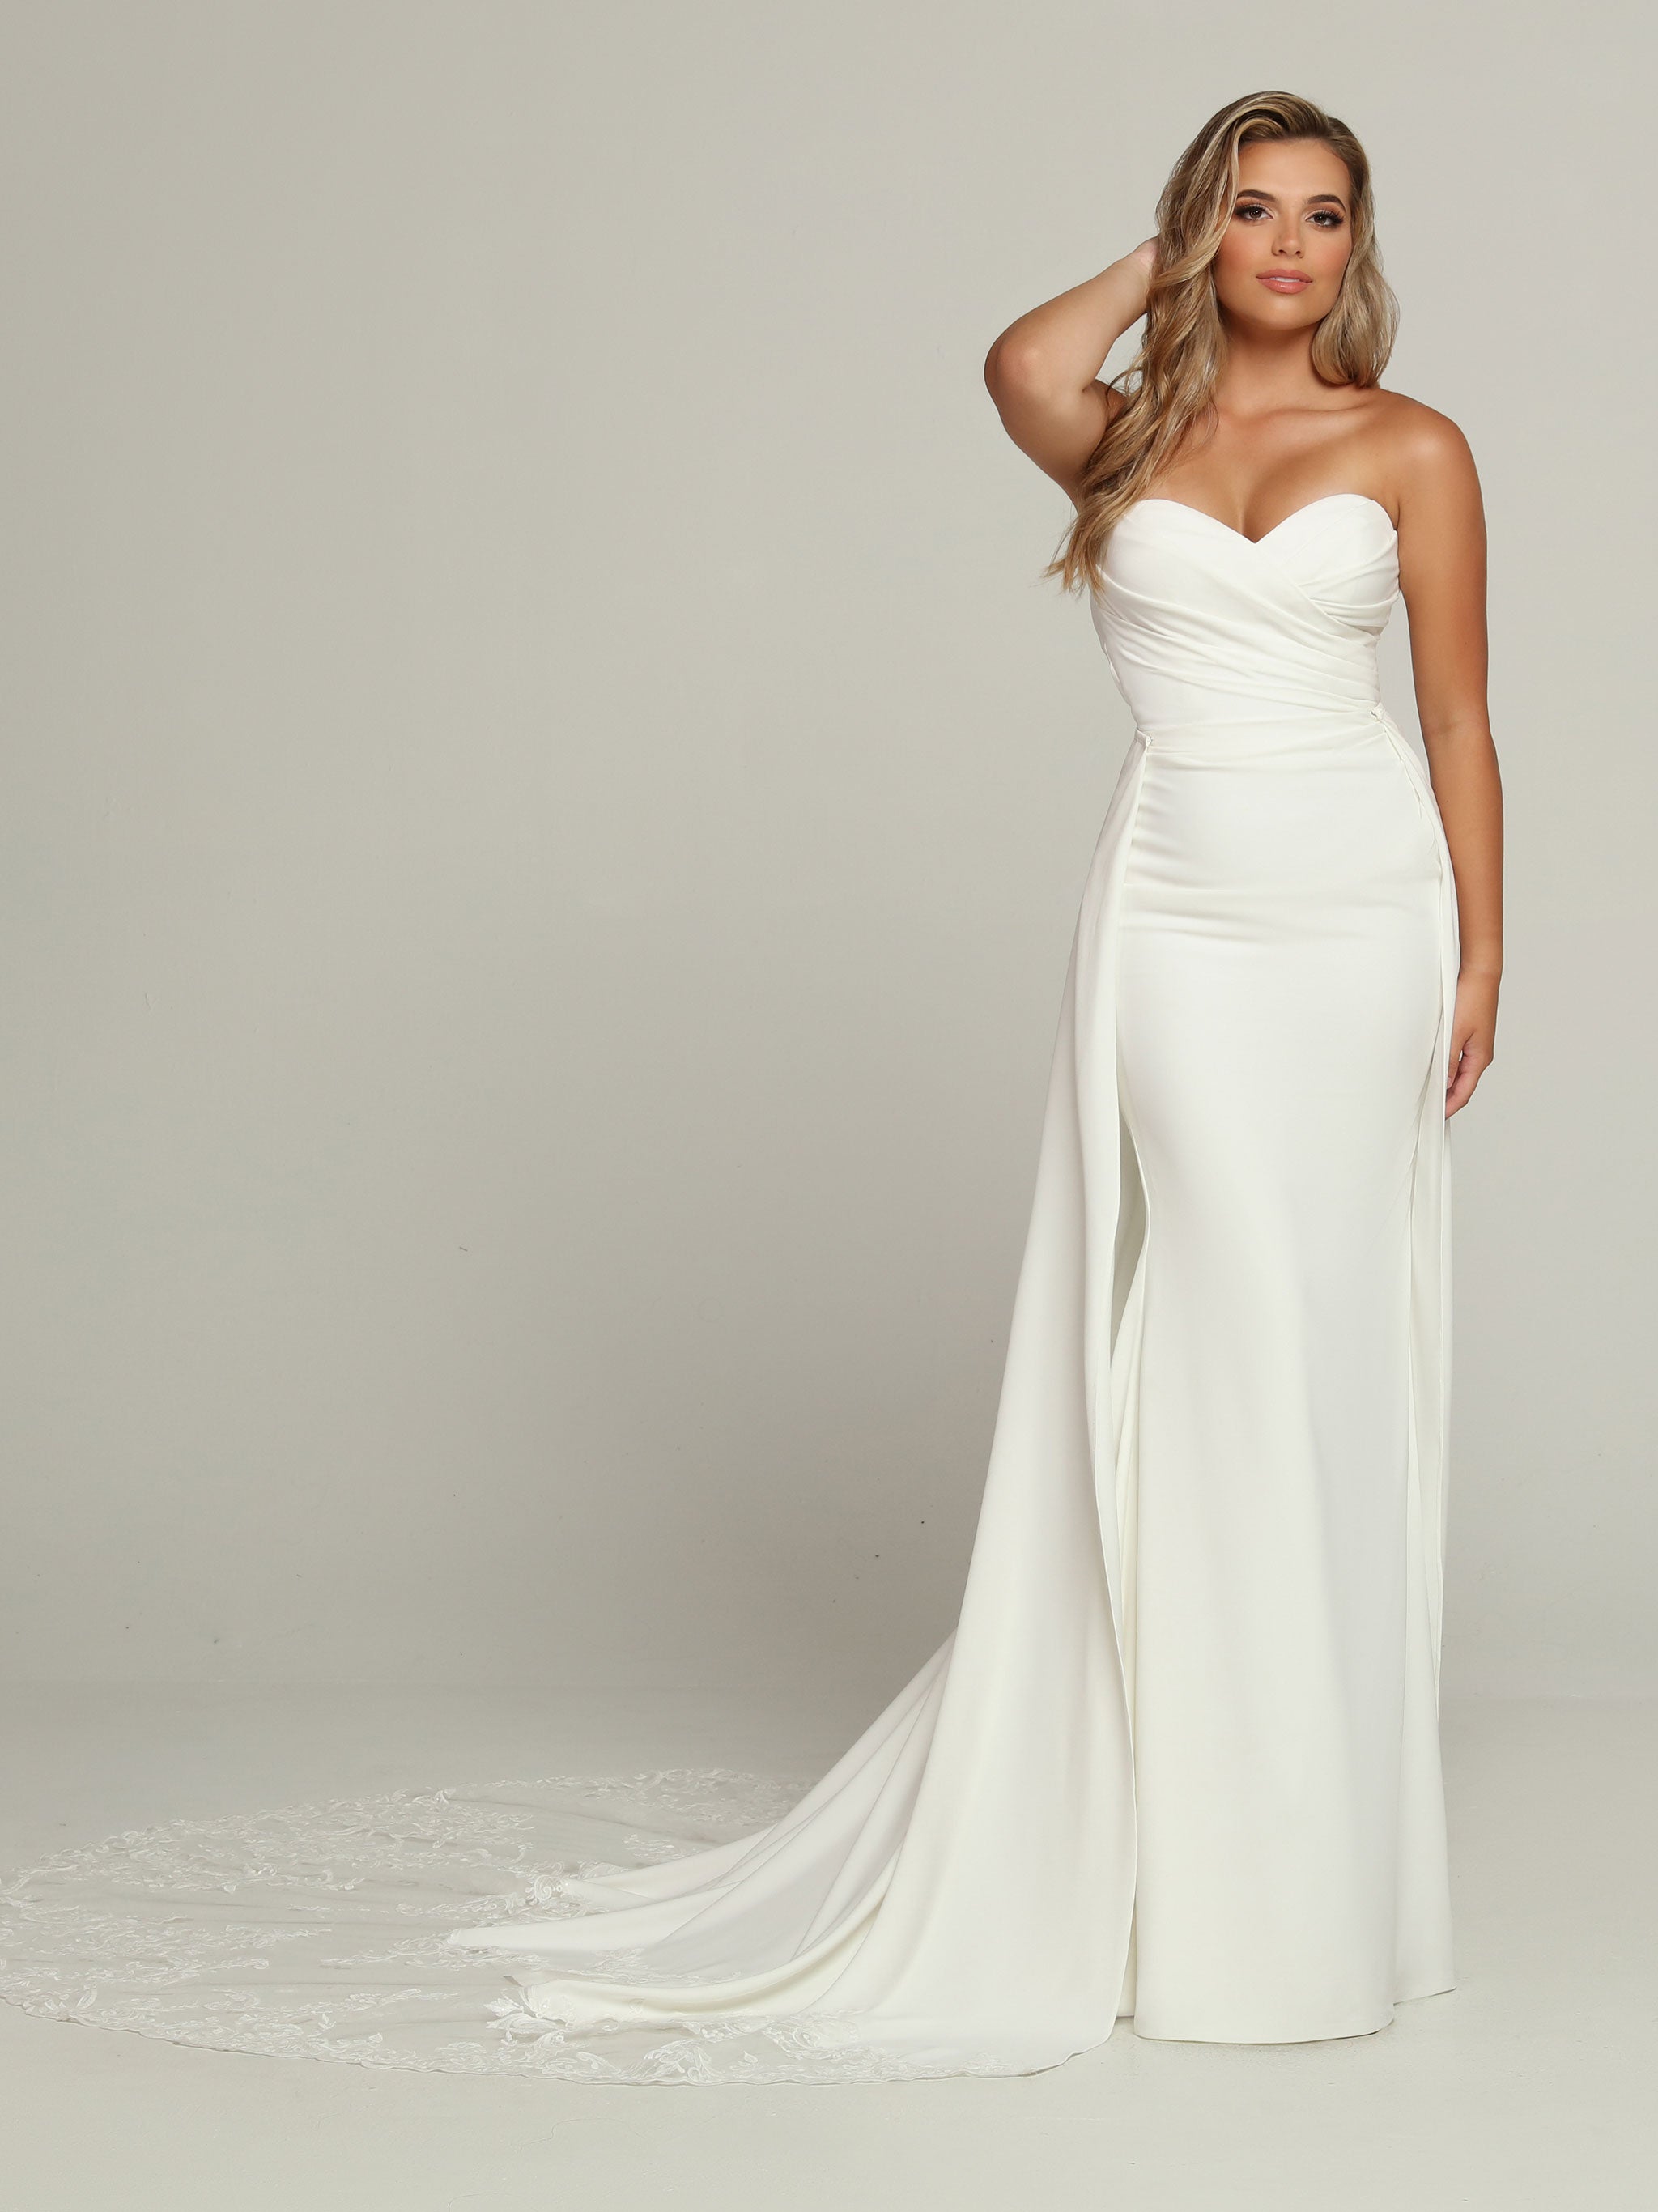 Simple Elegant Off White Jersey High Slit Bride Dress